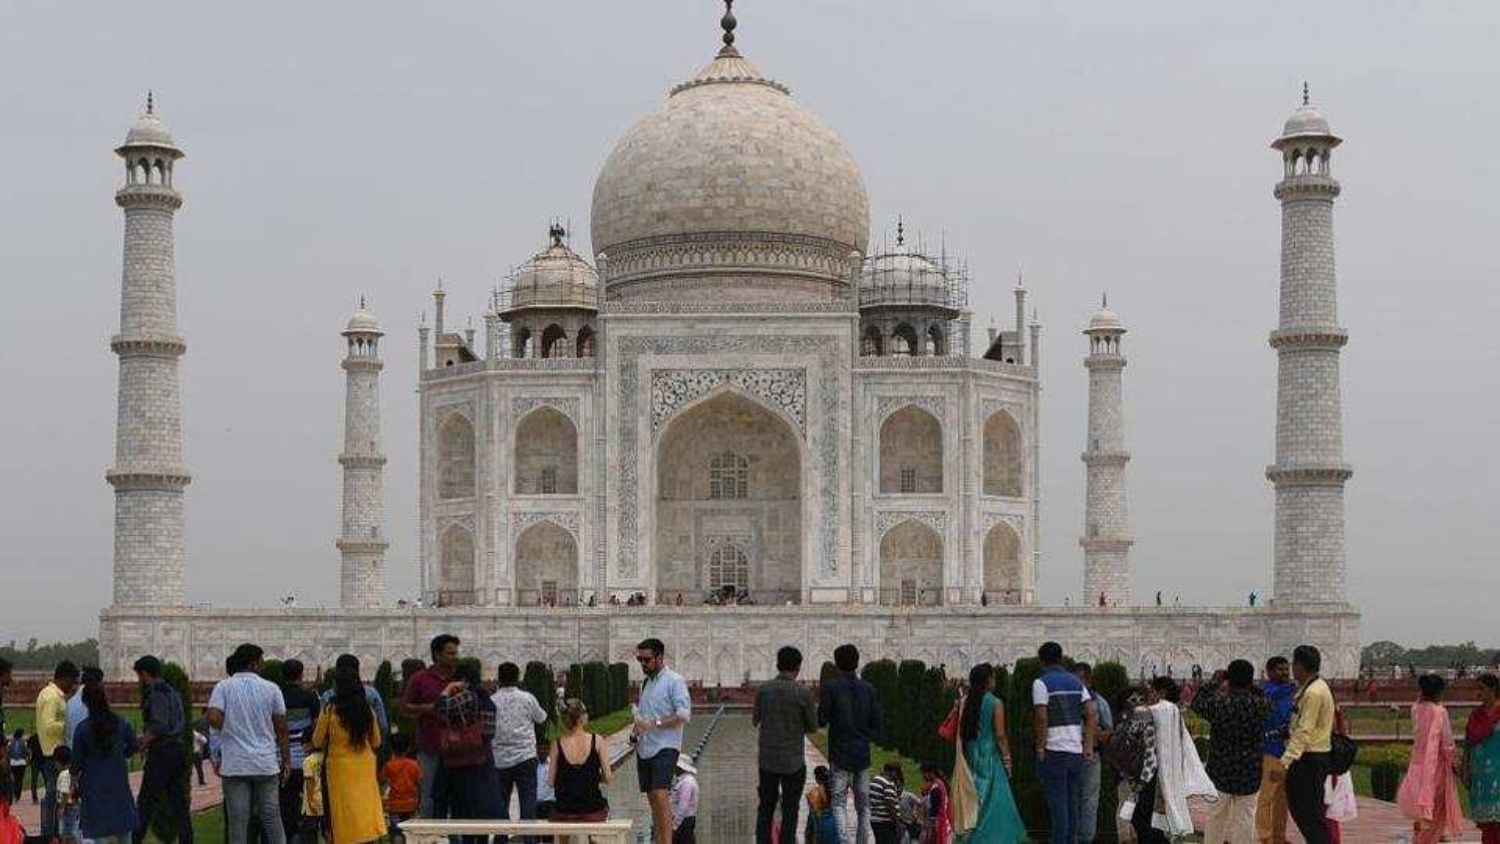 Chinese tourist takes drone into secure area at Taj Mahal